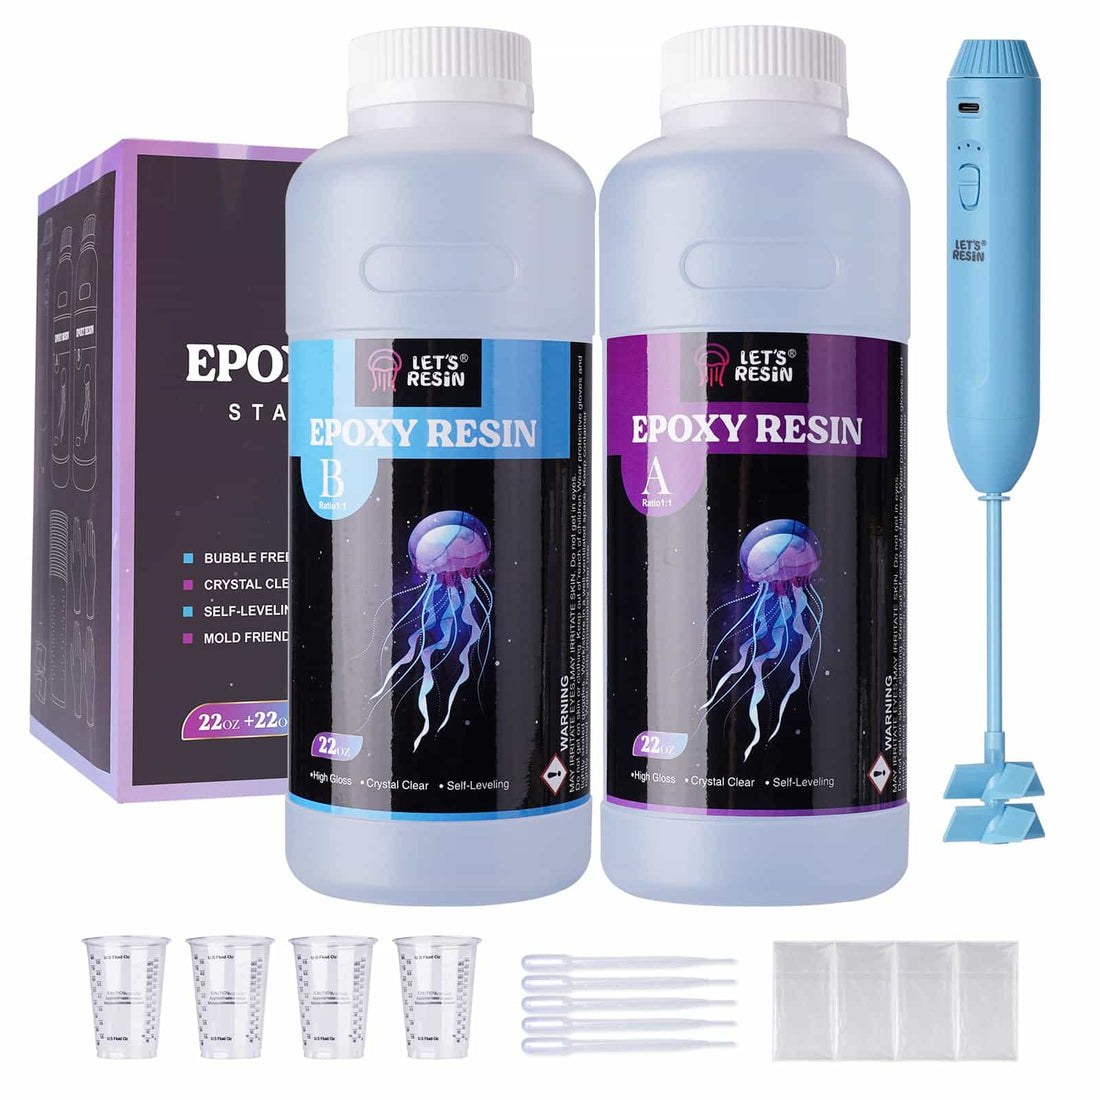 LET'S RESIN Epoxy Resin Kit Complet, 500ml Kit Resine Epoxy